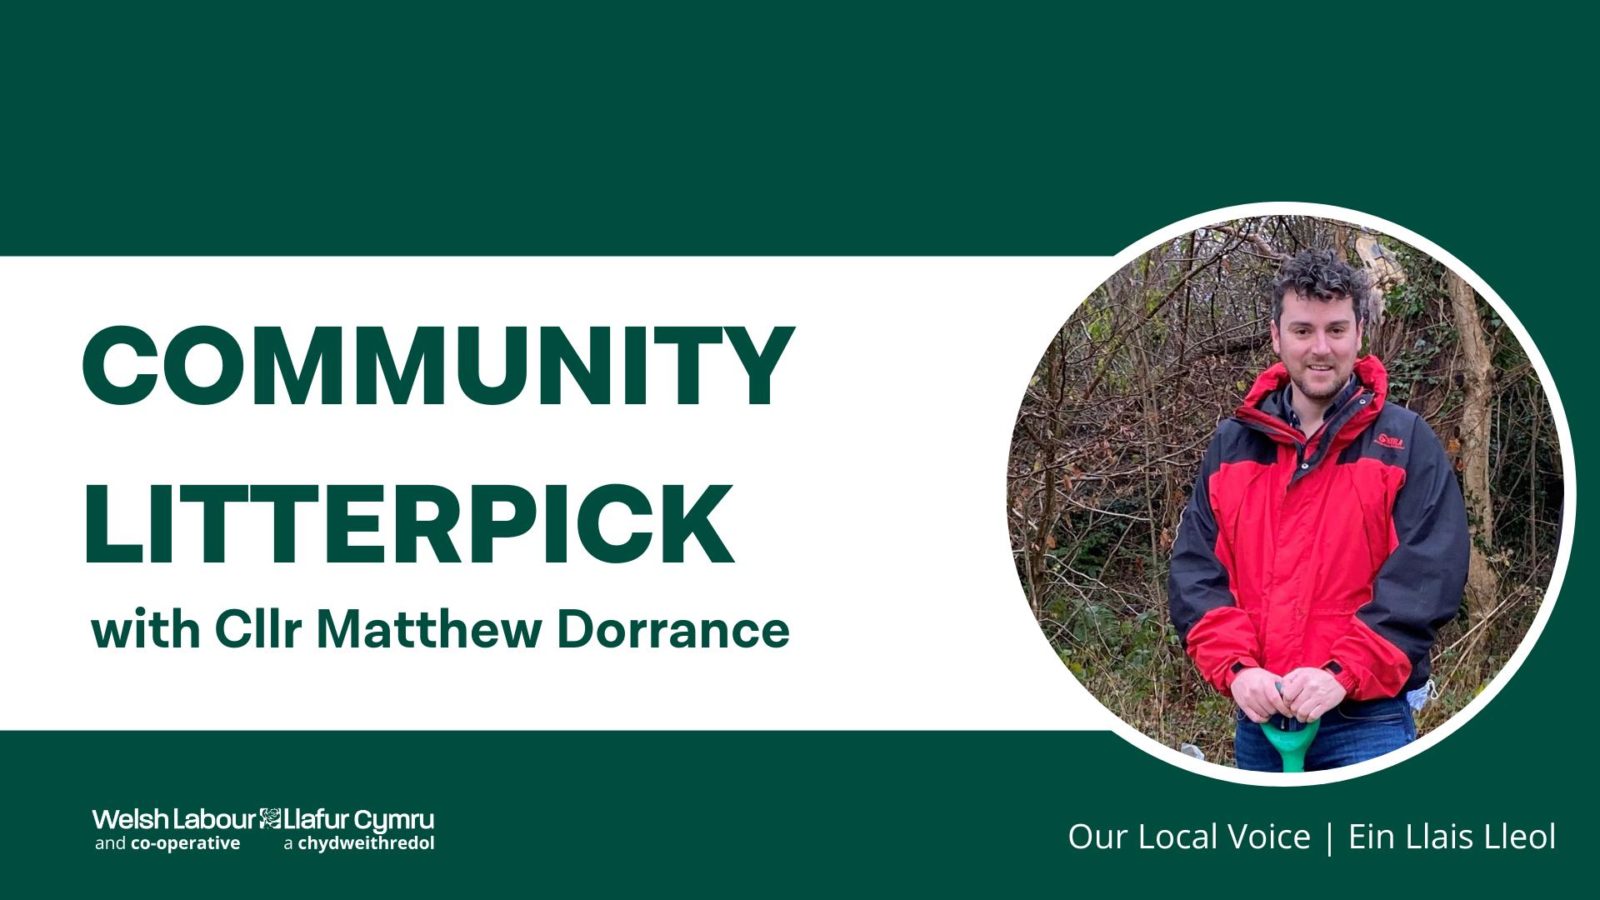 Community Litterpick with Cllr Matthew Dorrance